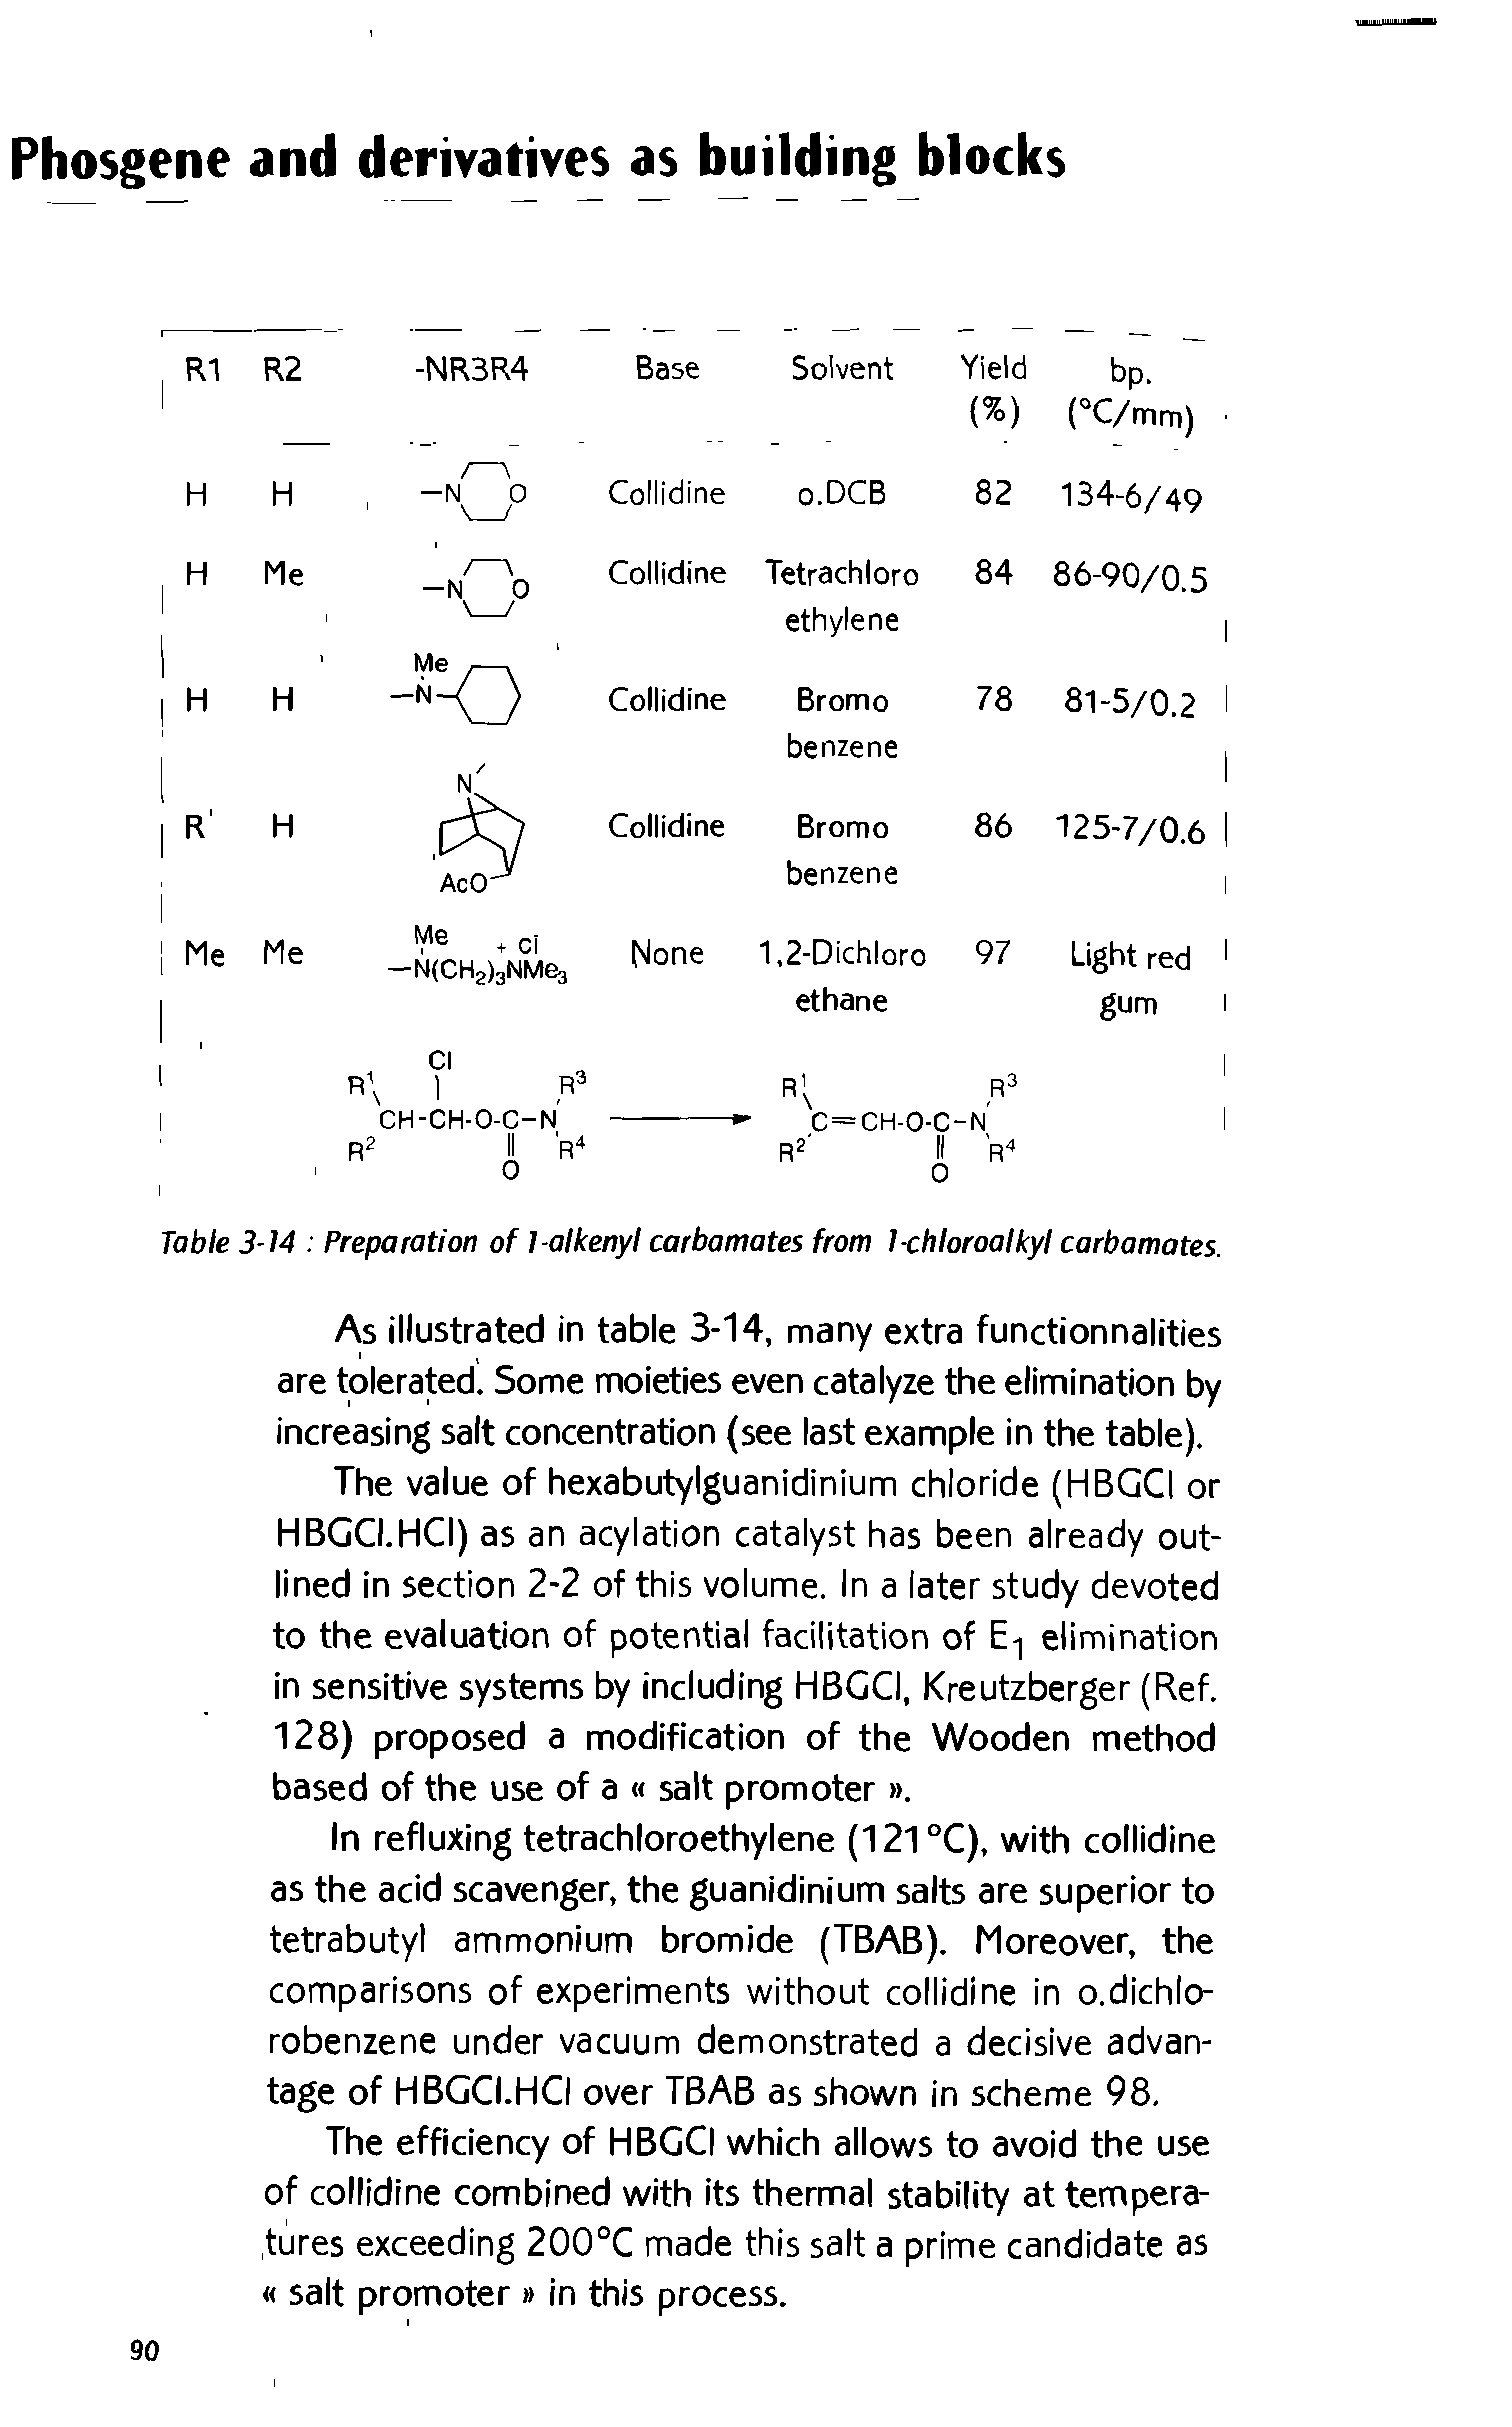 Table 3-14 Preparation of 1-alkenyl carbamates from 1-chloroalkyl carbamates.